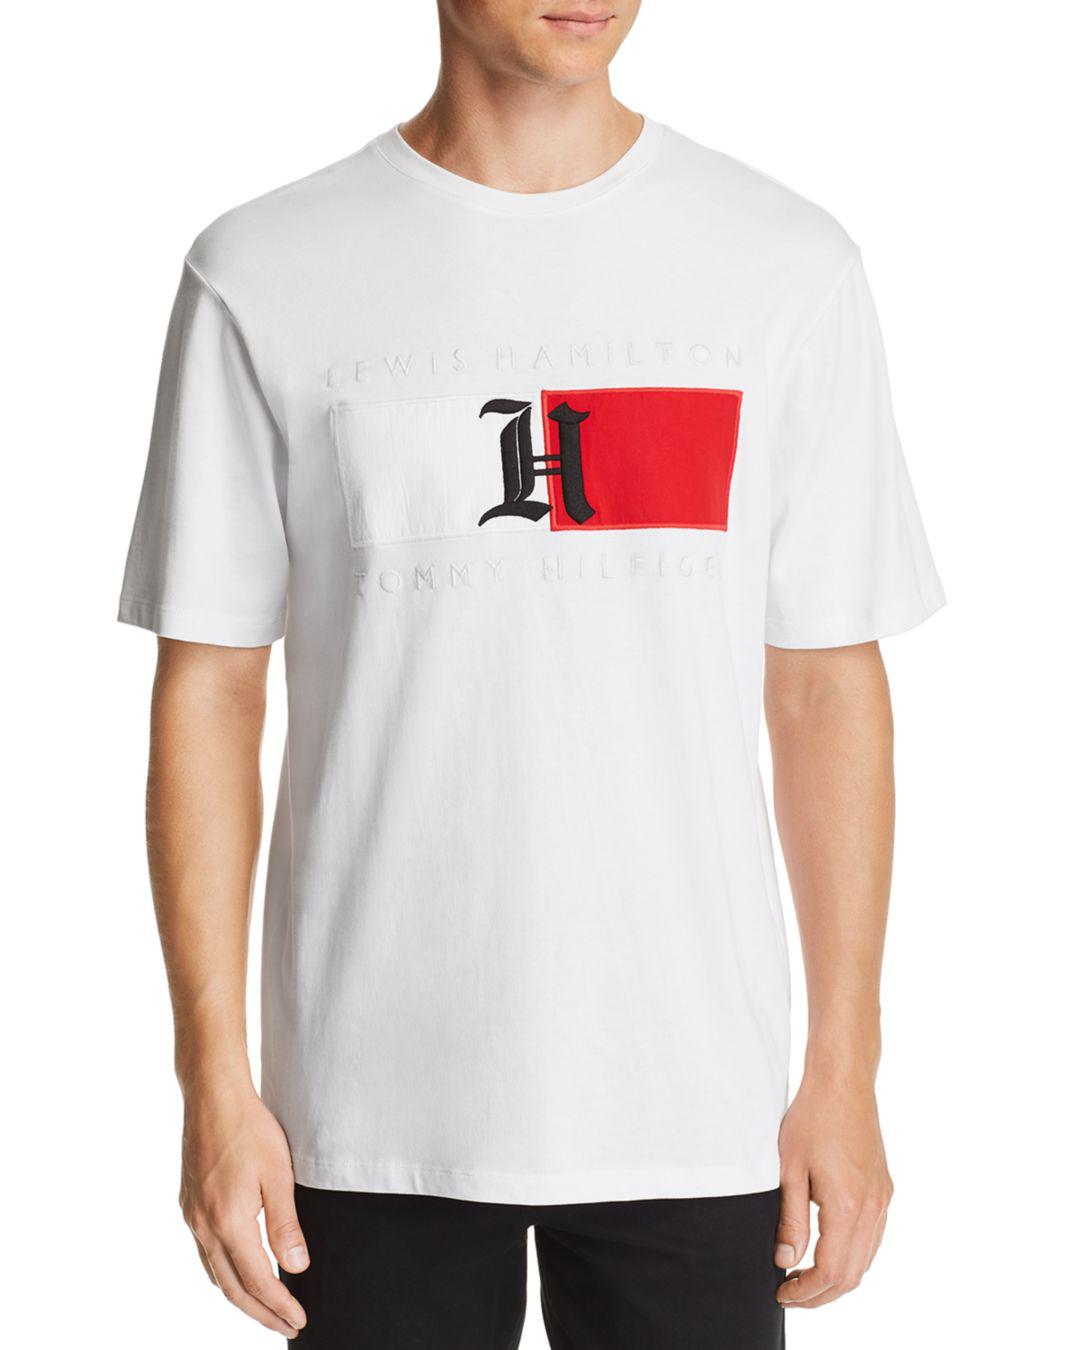 Tommy Hilfiger X Lewis Hamilton Shirt Discount - www.puzzlewood.net  1696025163